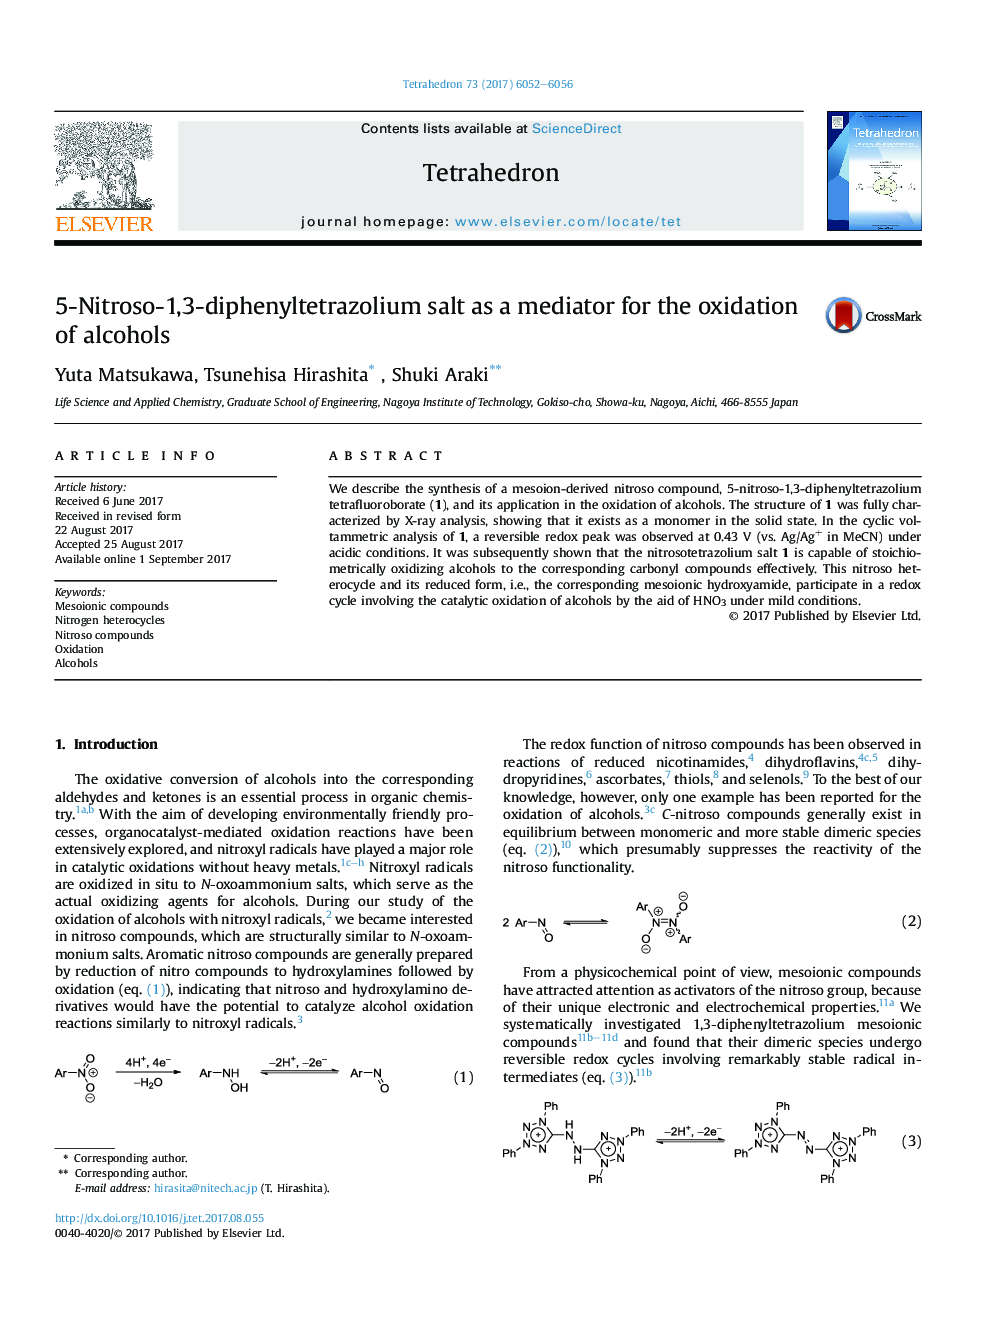 5-Nitroso-1,3-diphenyltetrazolium salt as a mediator for the oxidation of alcohols